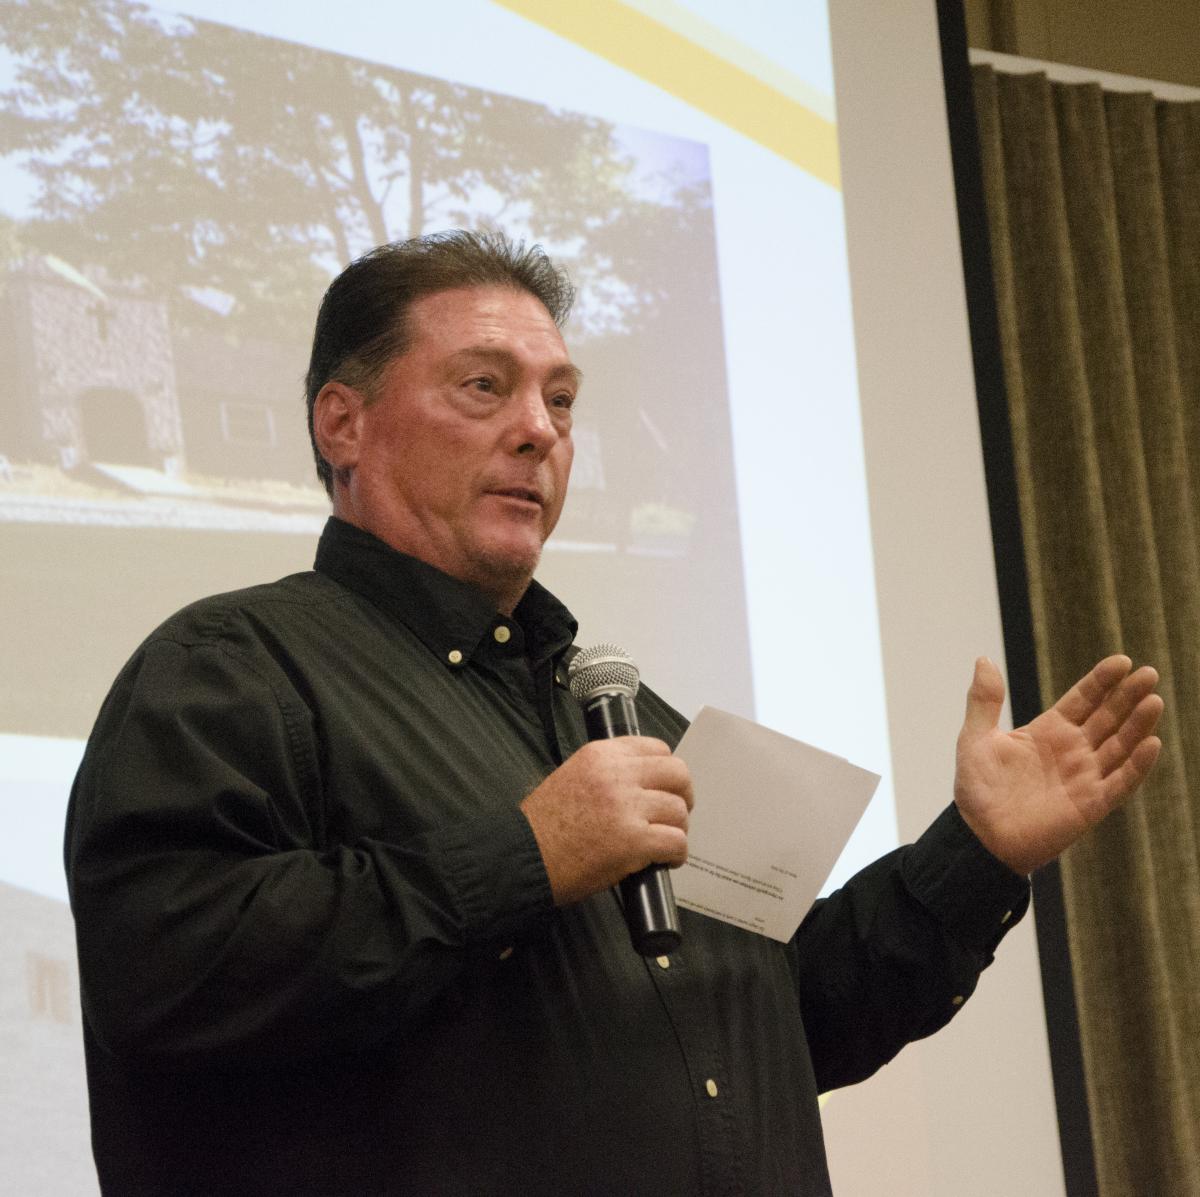 Bill Grizer, Owner of Grizer Castle, speaks at the November 17 2016 PioPitch program at Marietta College